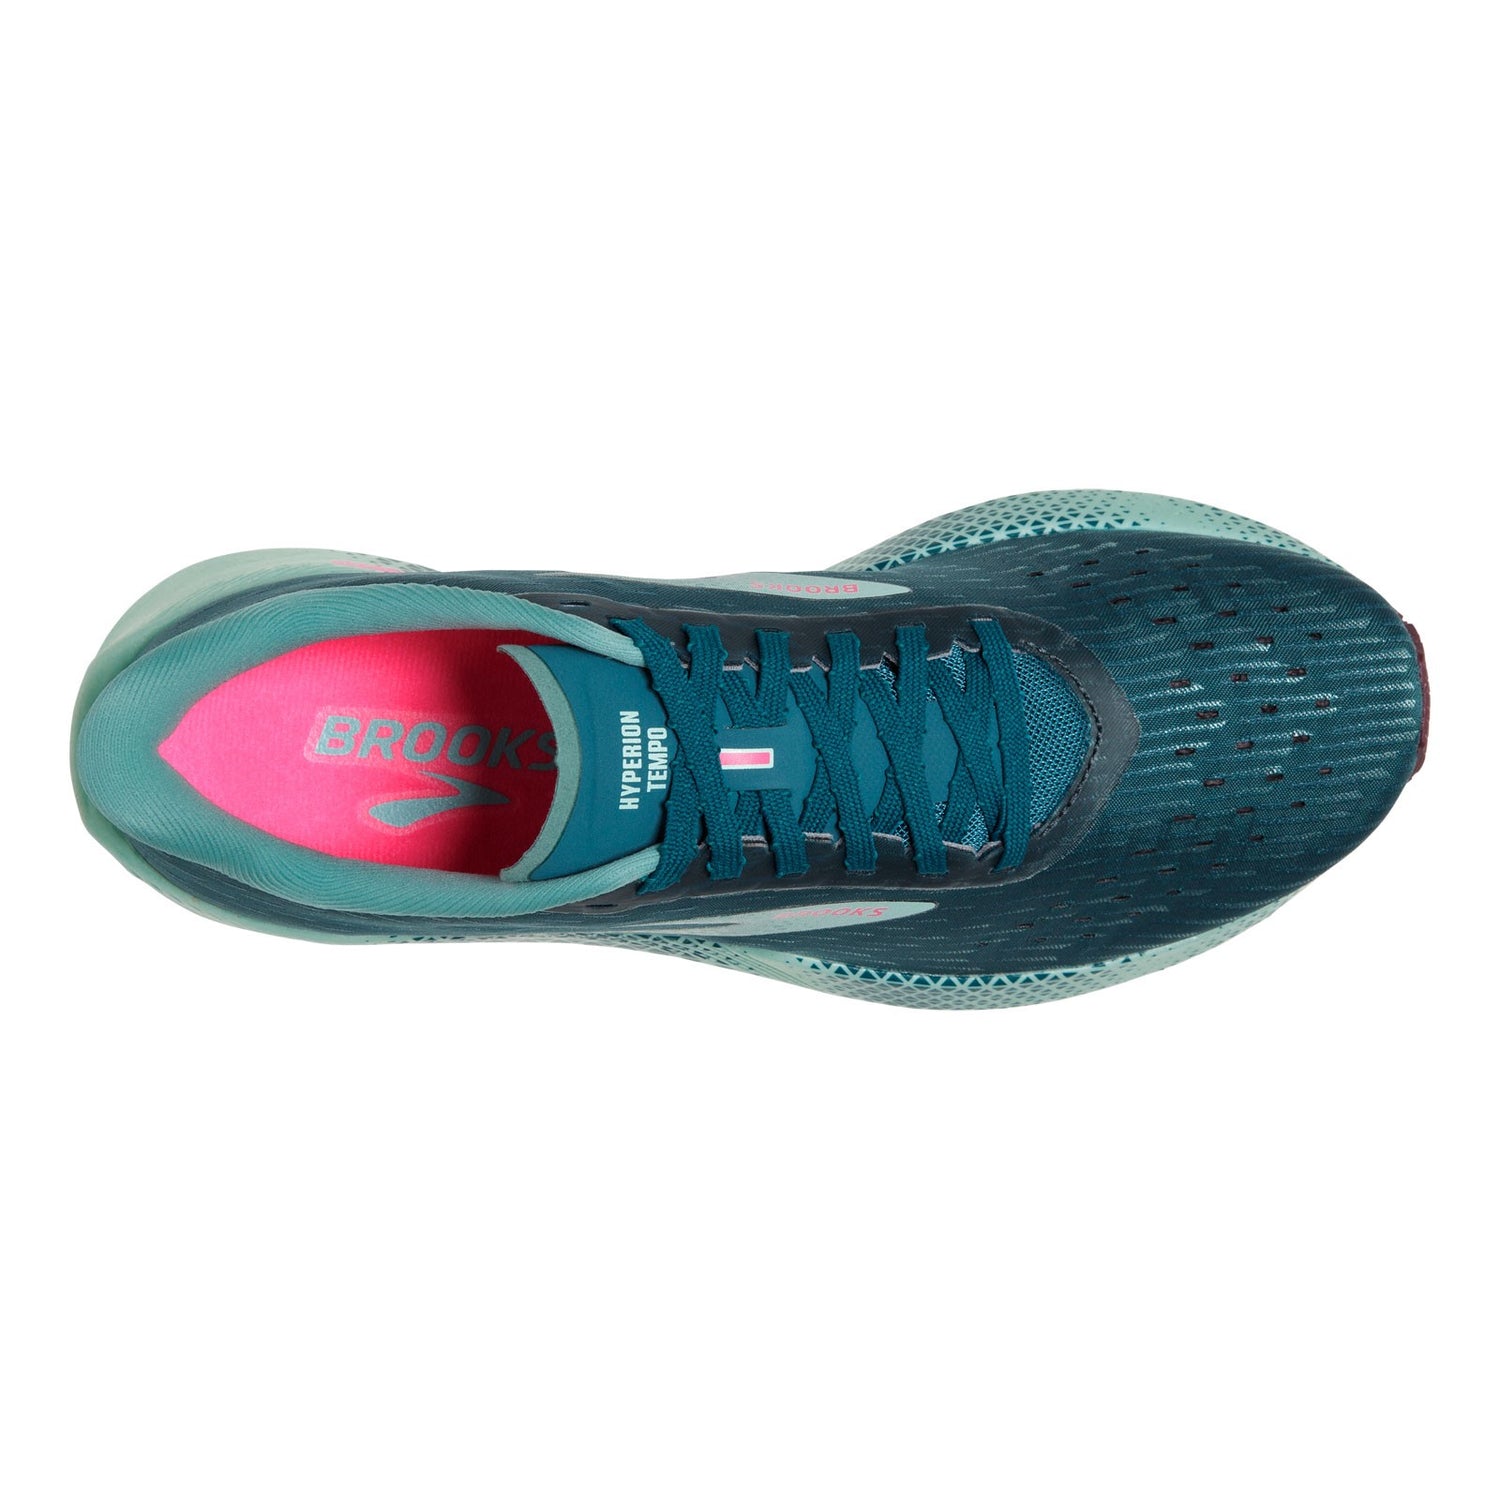 Peltz Shoes  Women's Brooks Hyperion Tempo Running Shoe Blue Coral/Blue 120328 1B 491